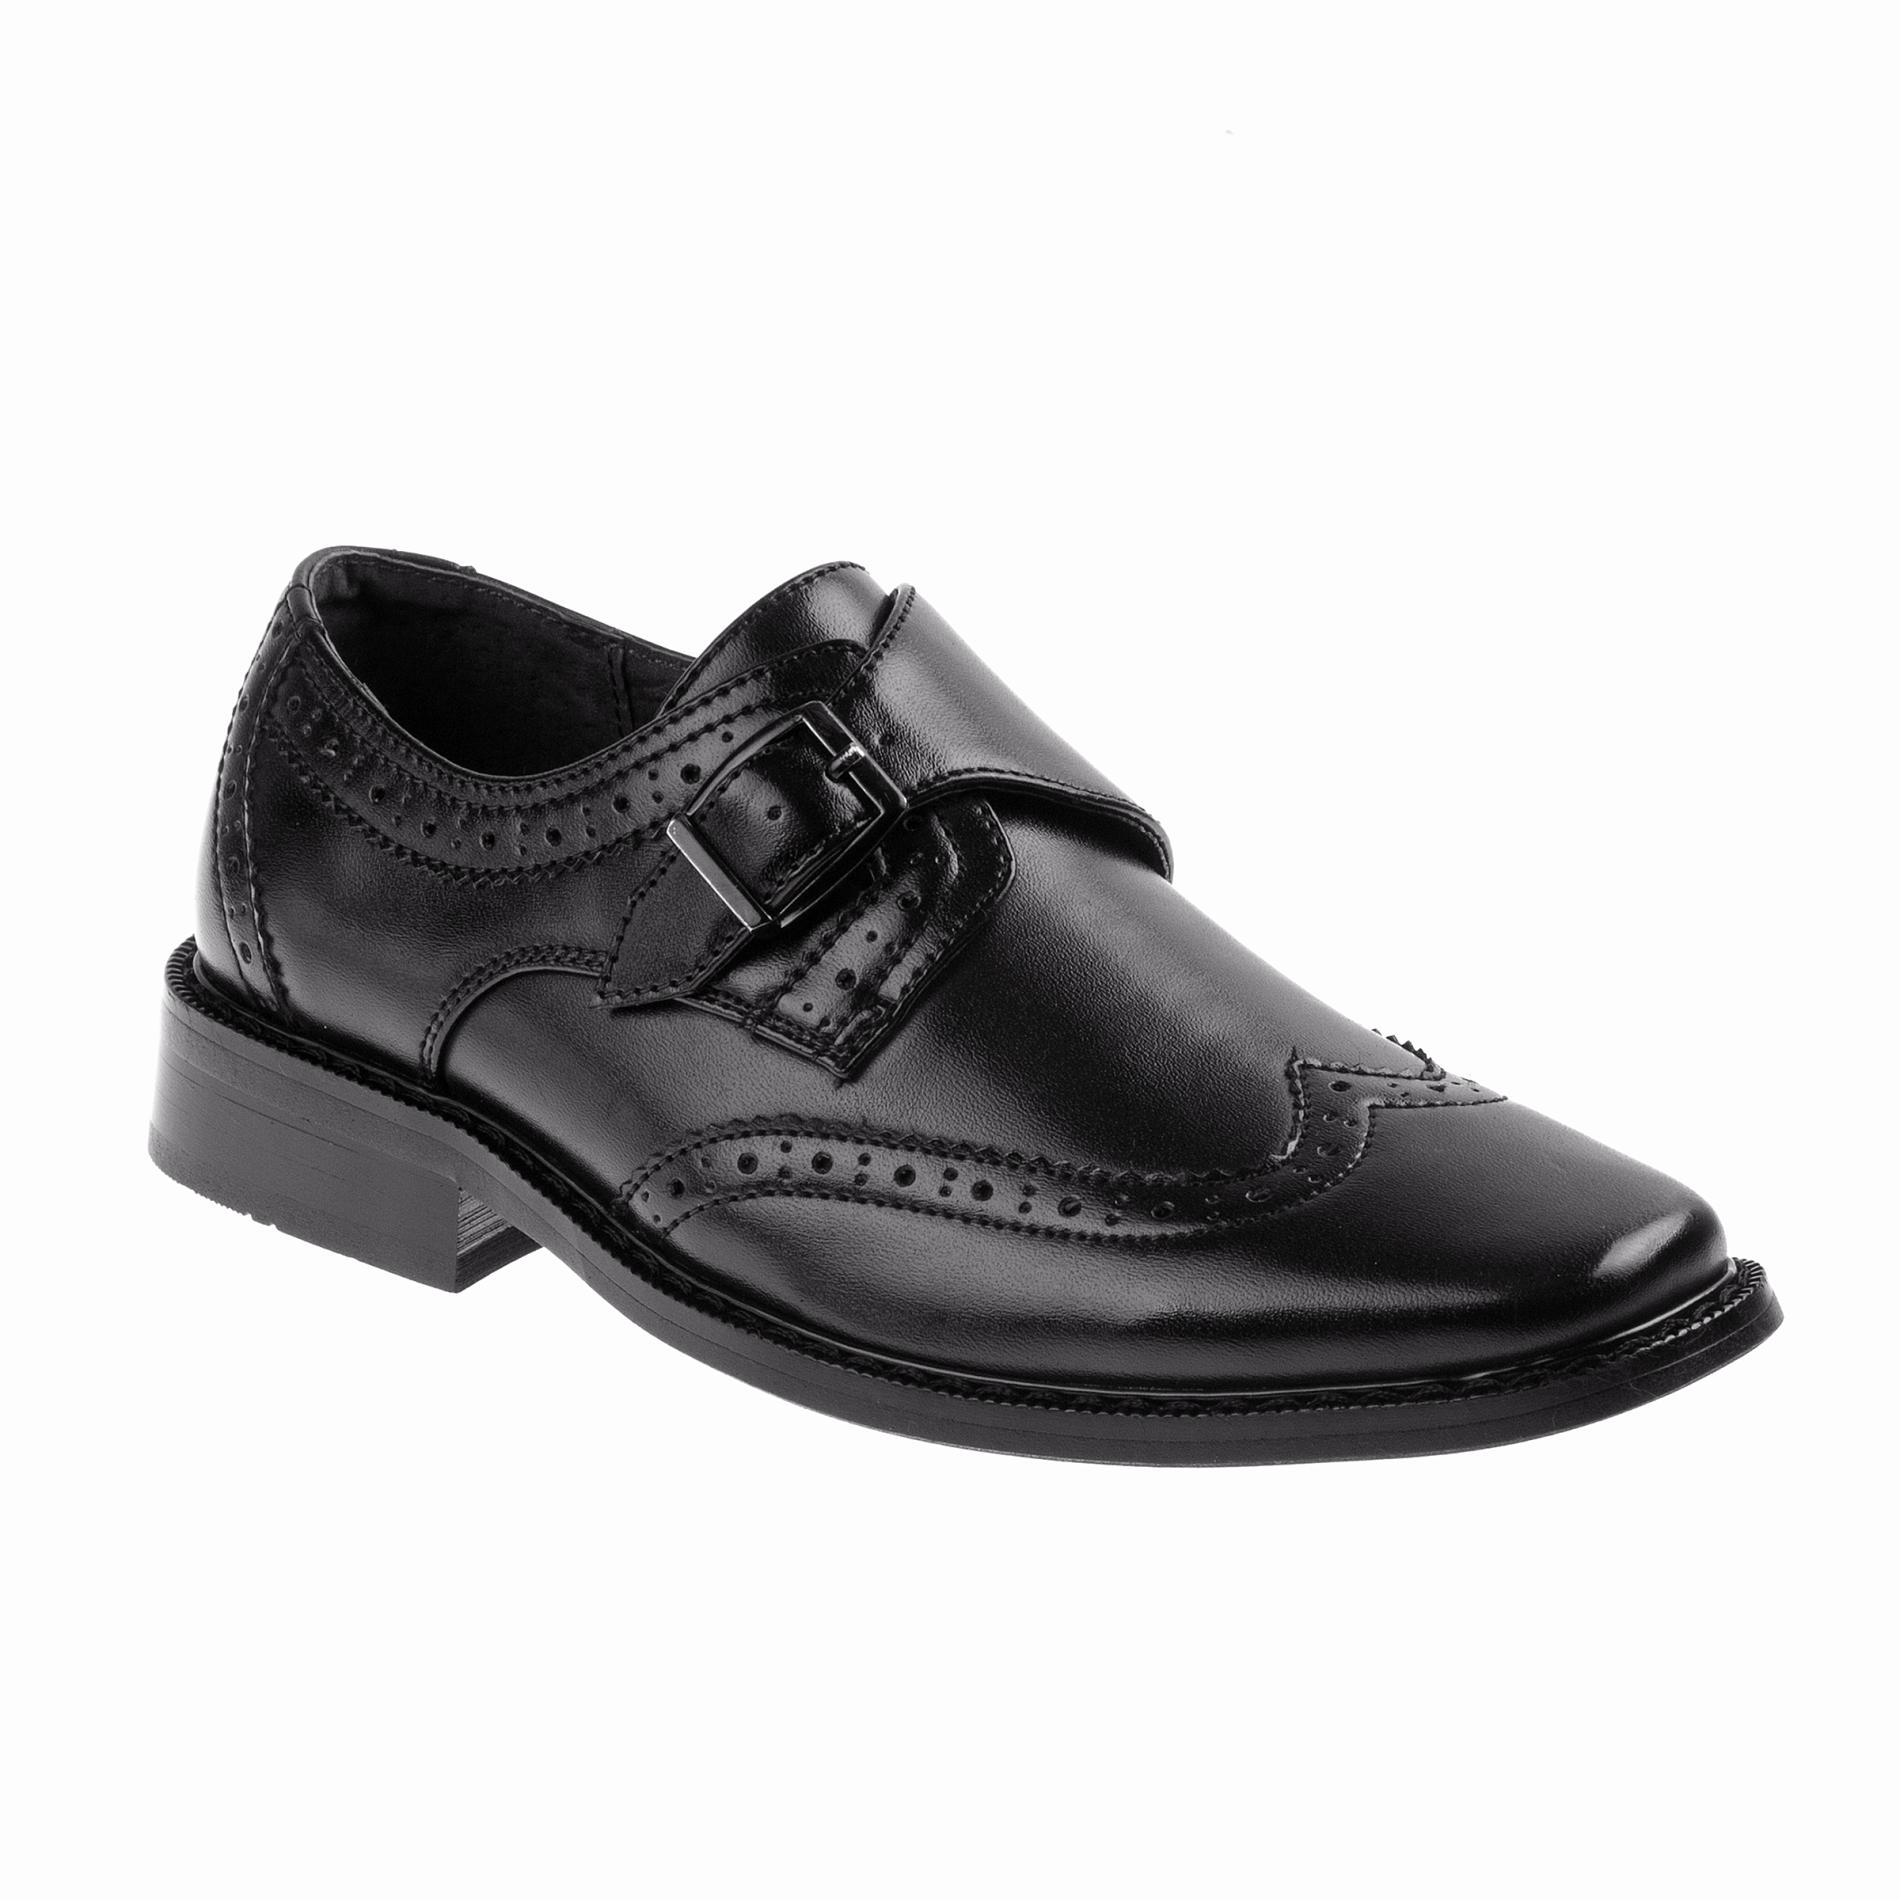 Joseph Allen Boys' Monk Strap Wingtip Dress Shoe - Black